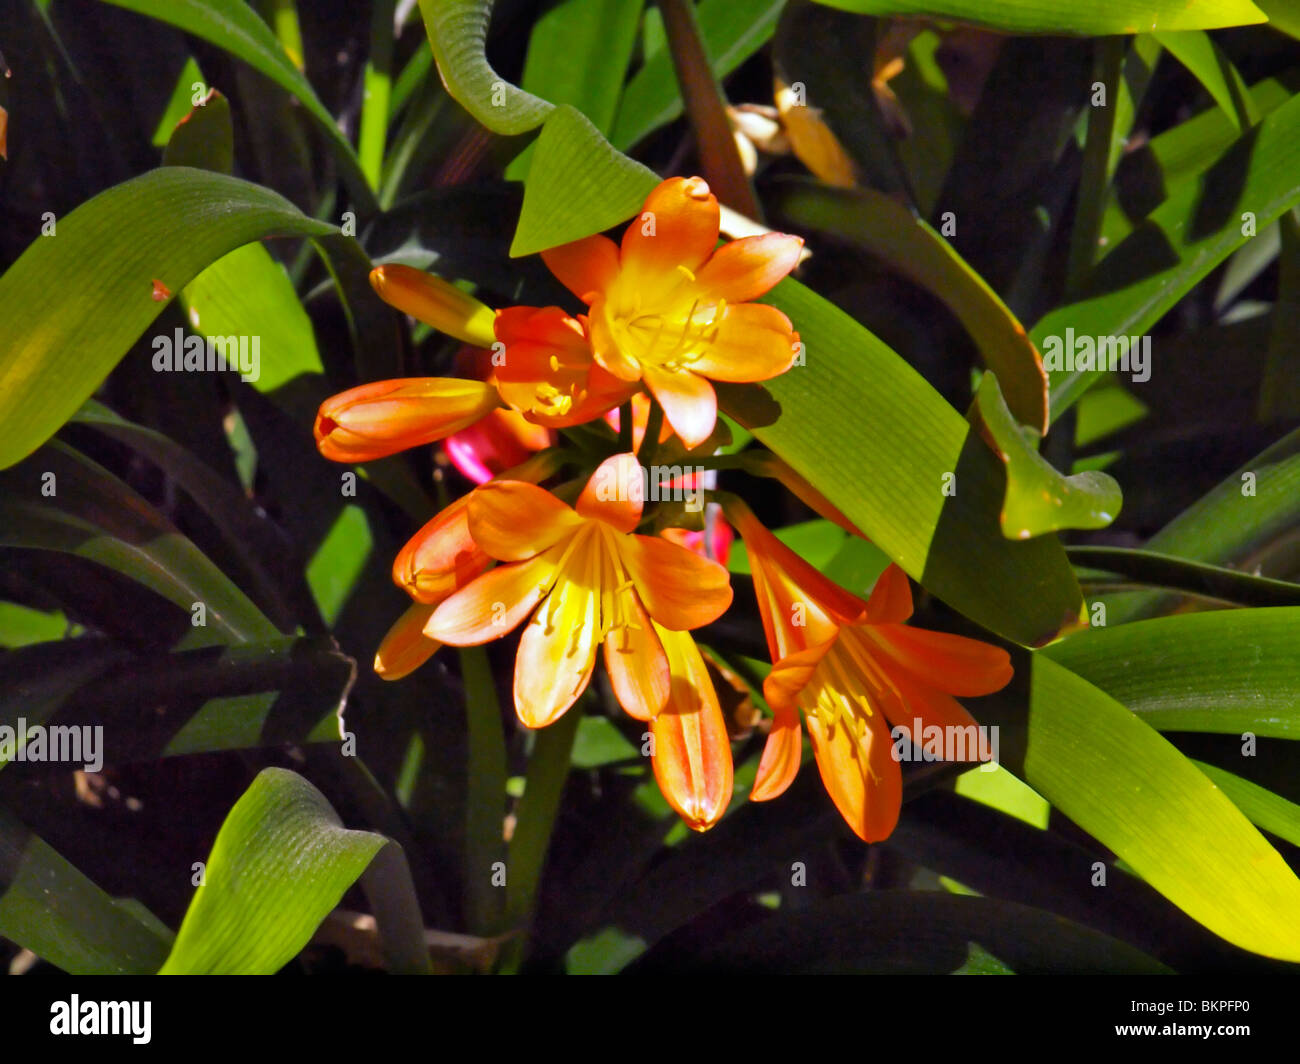 Clivia Miniata. Orange lily native to southern Africa. Stock Photo